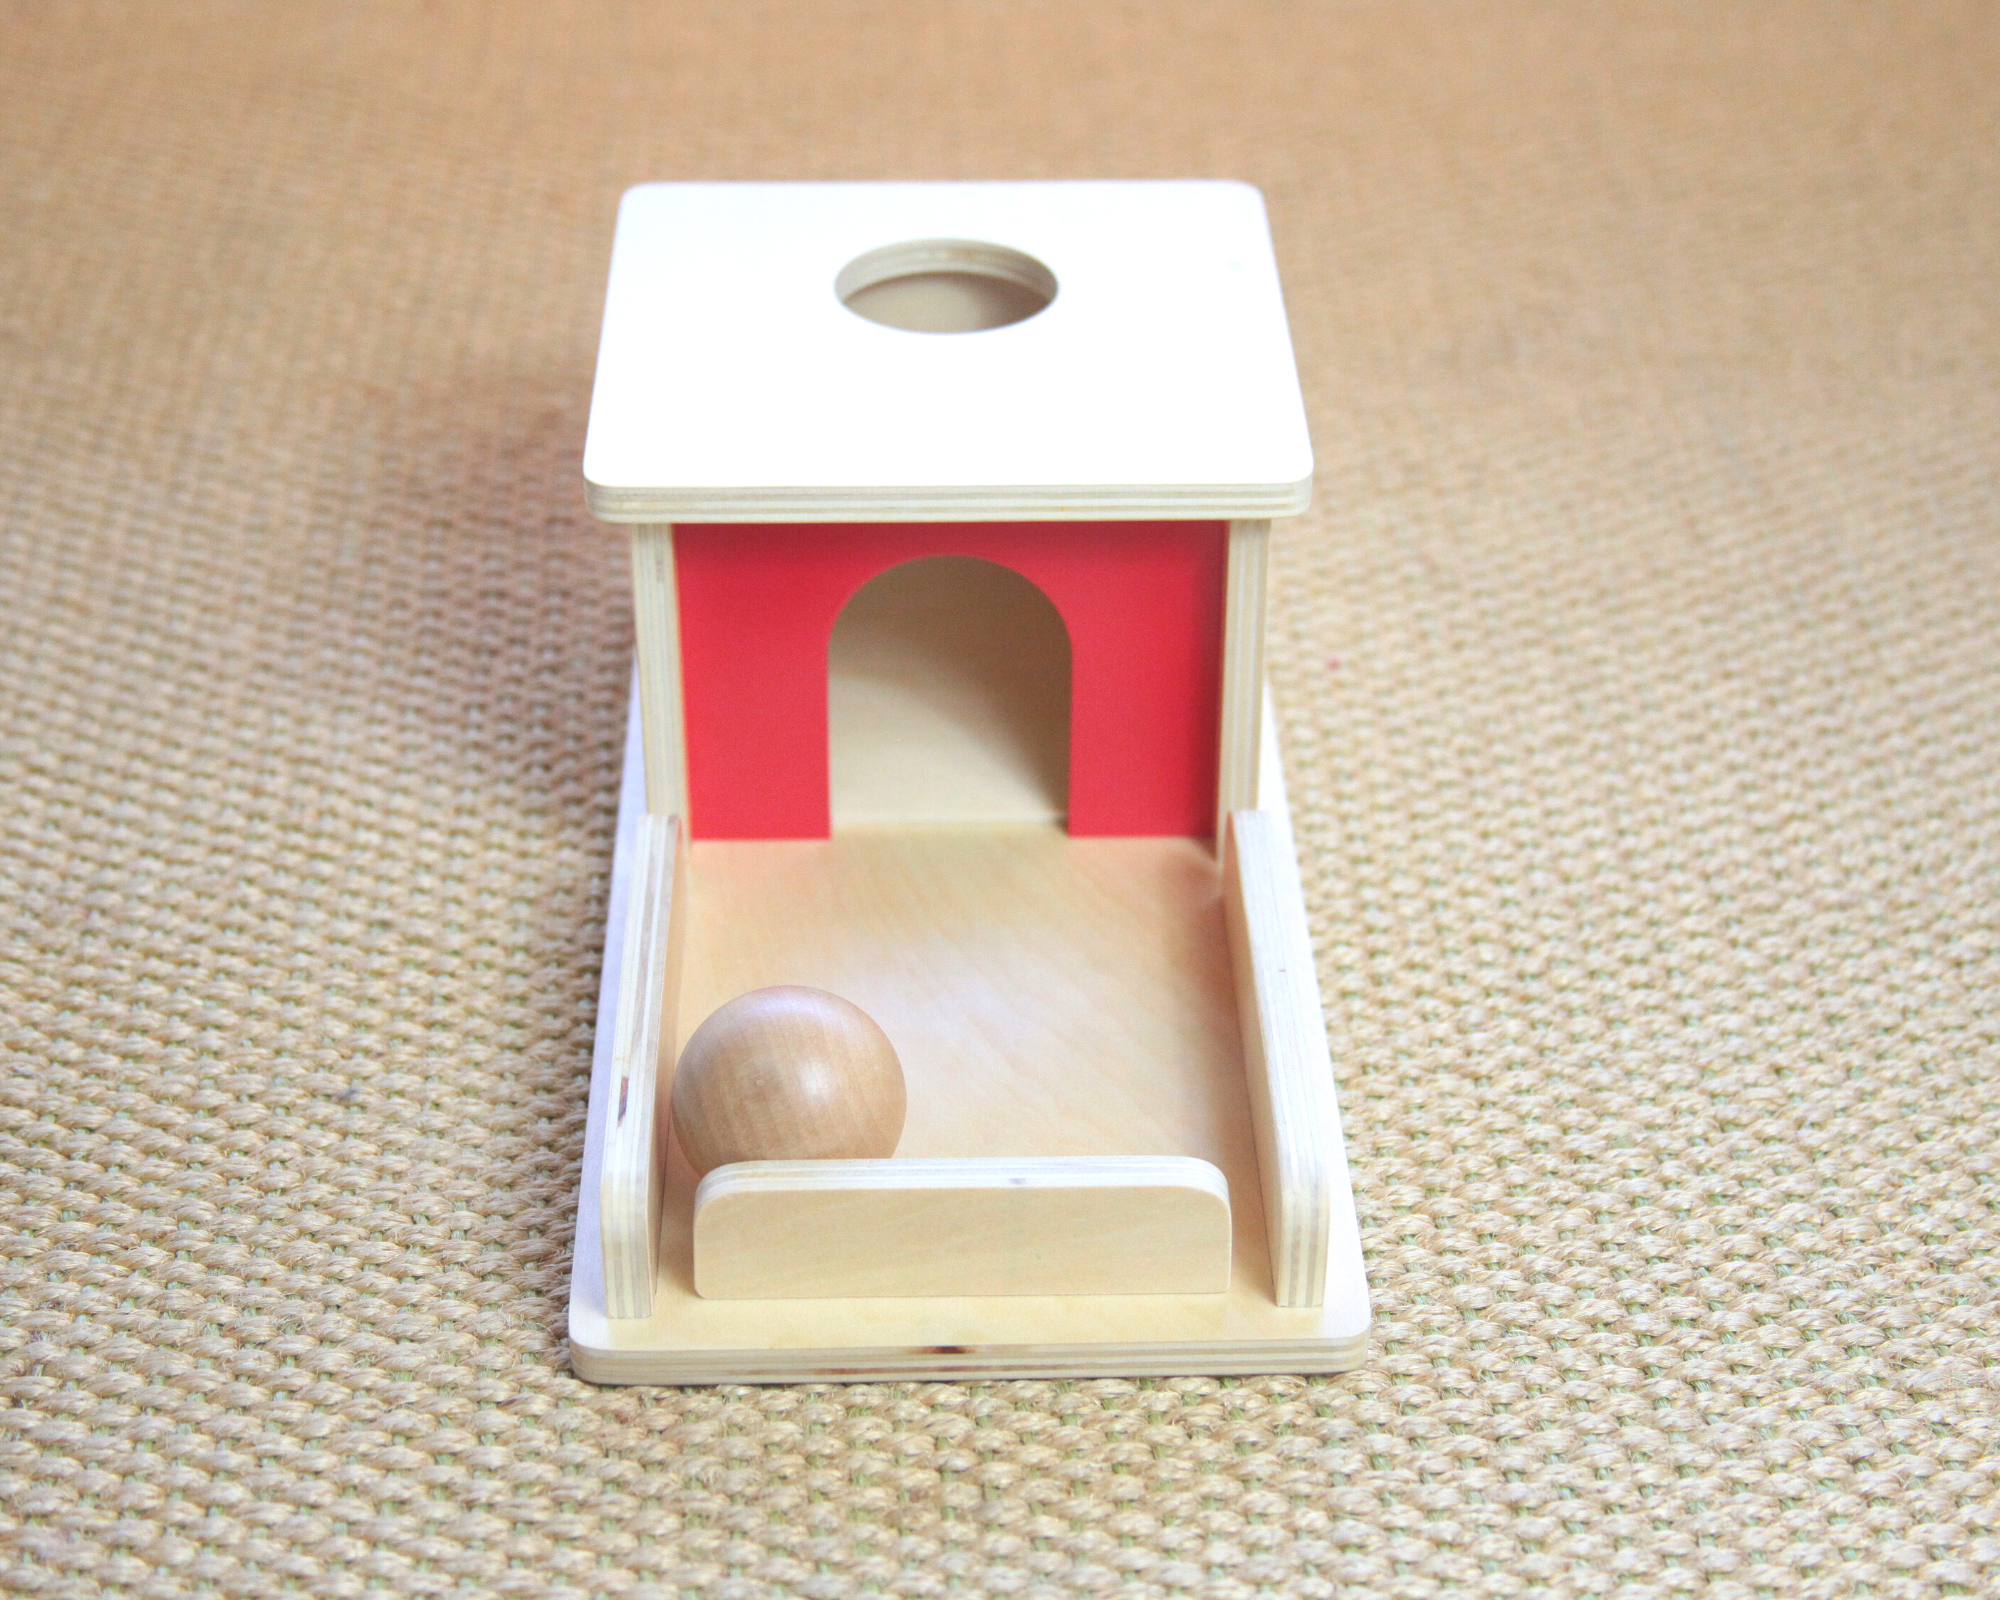 Objektpermanenz Box Permanent Ziel Box Kinder Lernspielzeug Pädagogik Spielzeug für Kinder